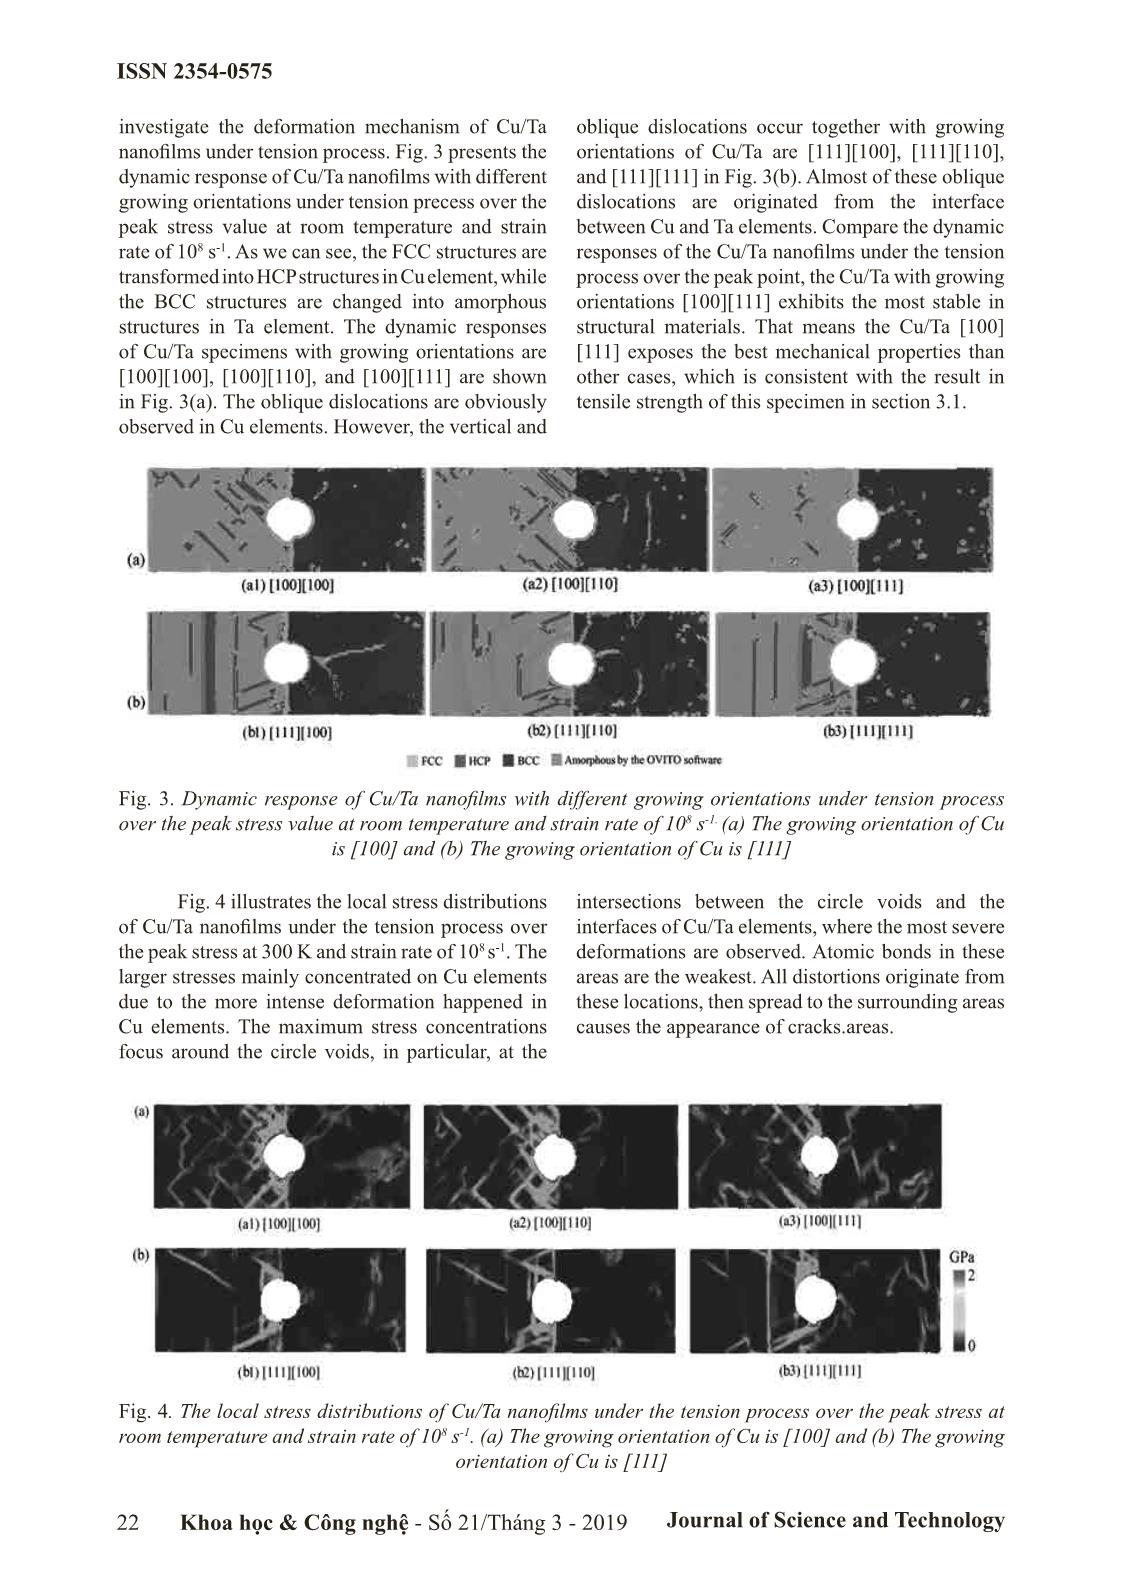 Effects of atomics growing orientation to mechanical properties of Cu/Ta bilayer using molecular dynamics simulation trang 3